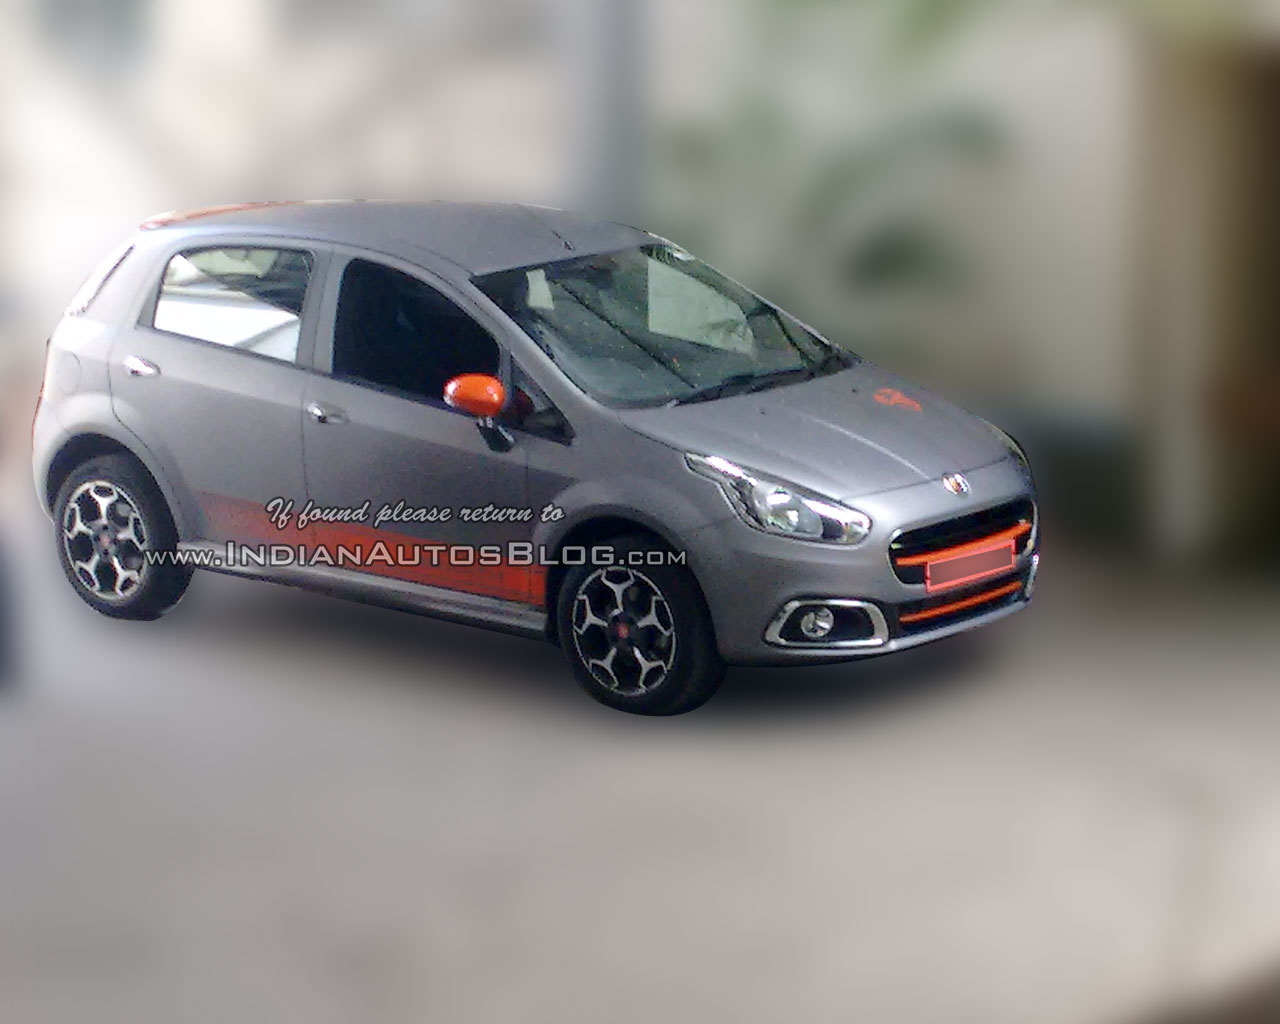 Fiat abarth-punto Cars Price in India 2022: Fiat abarth-punto Cars